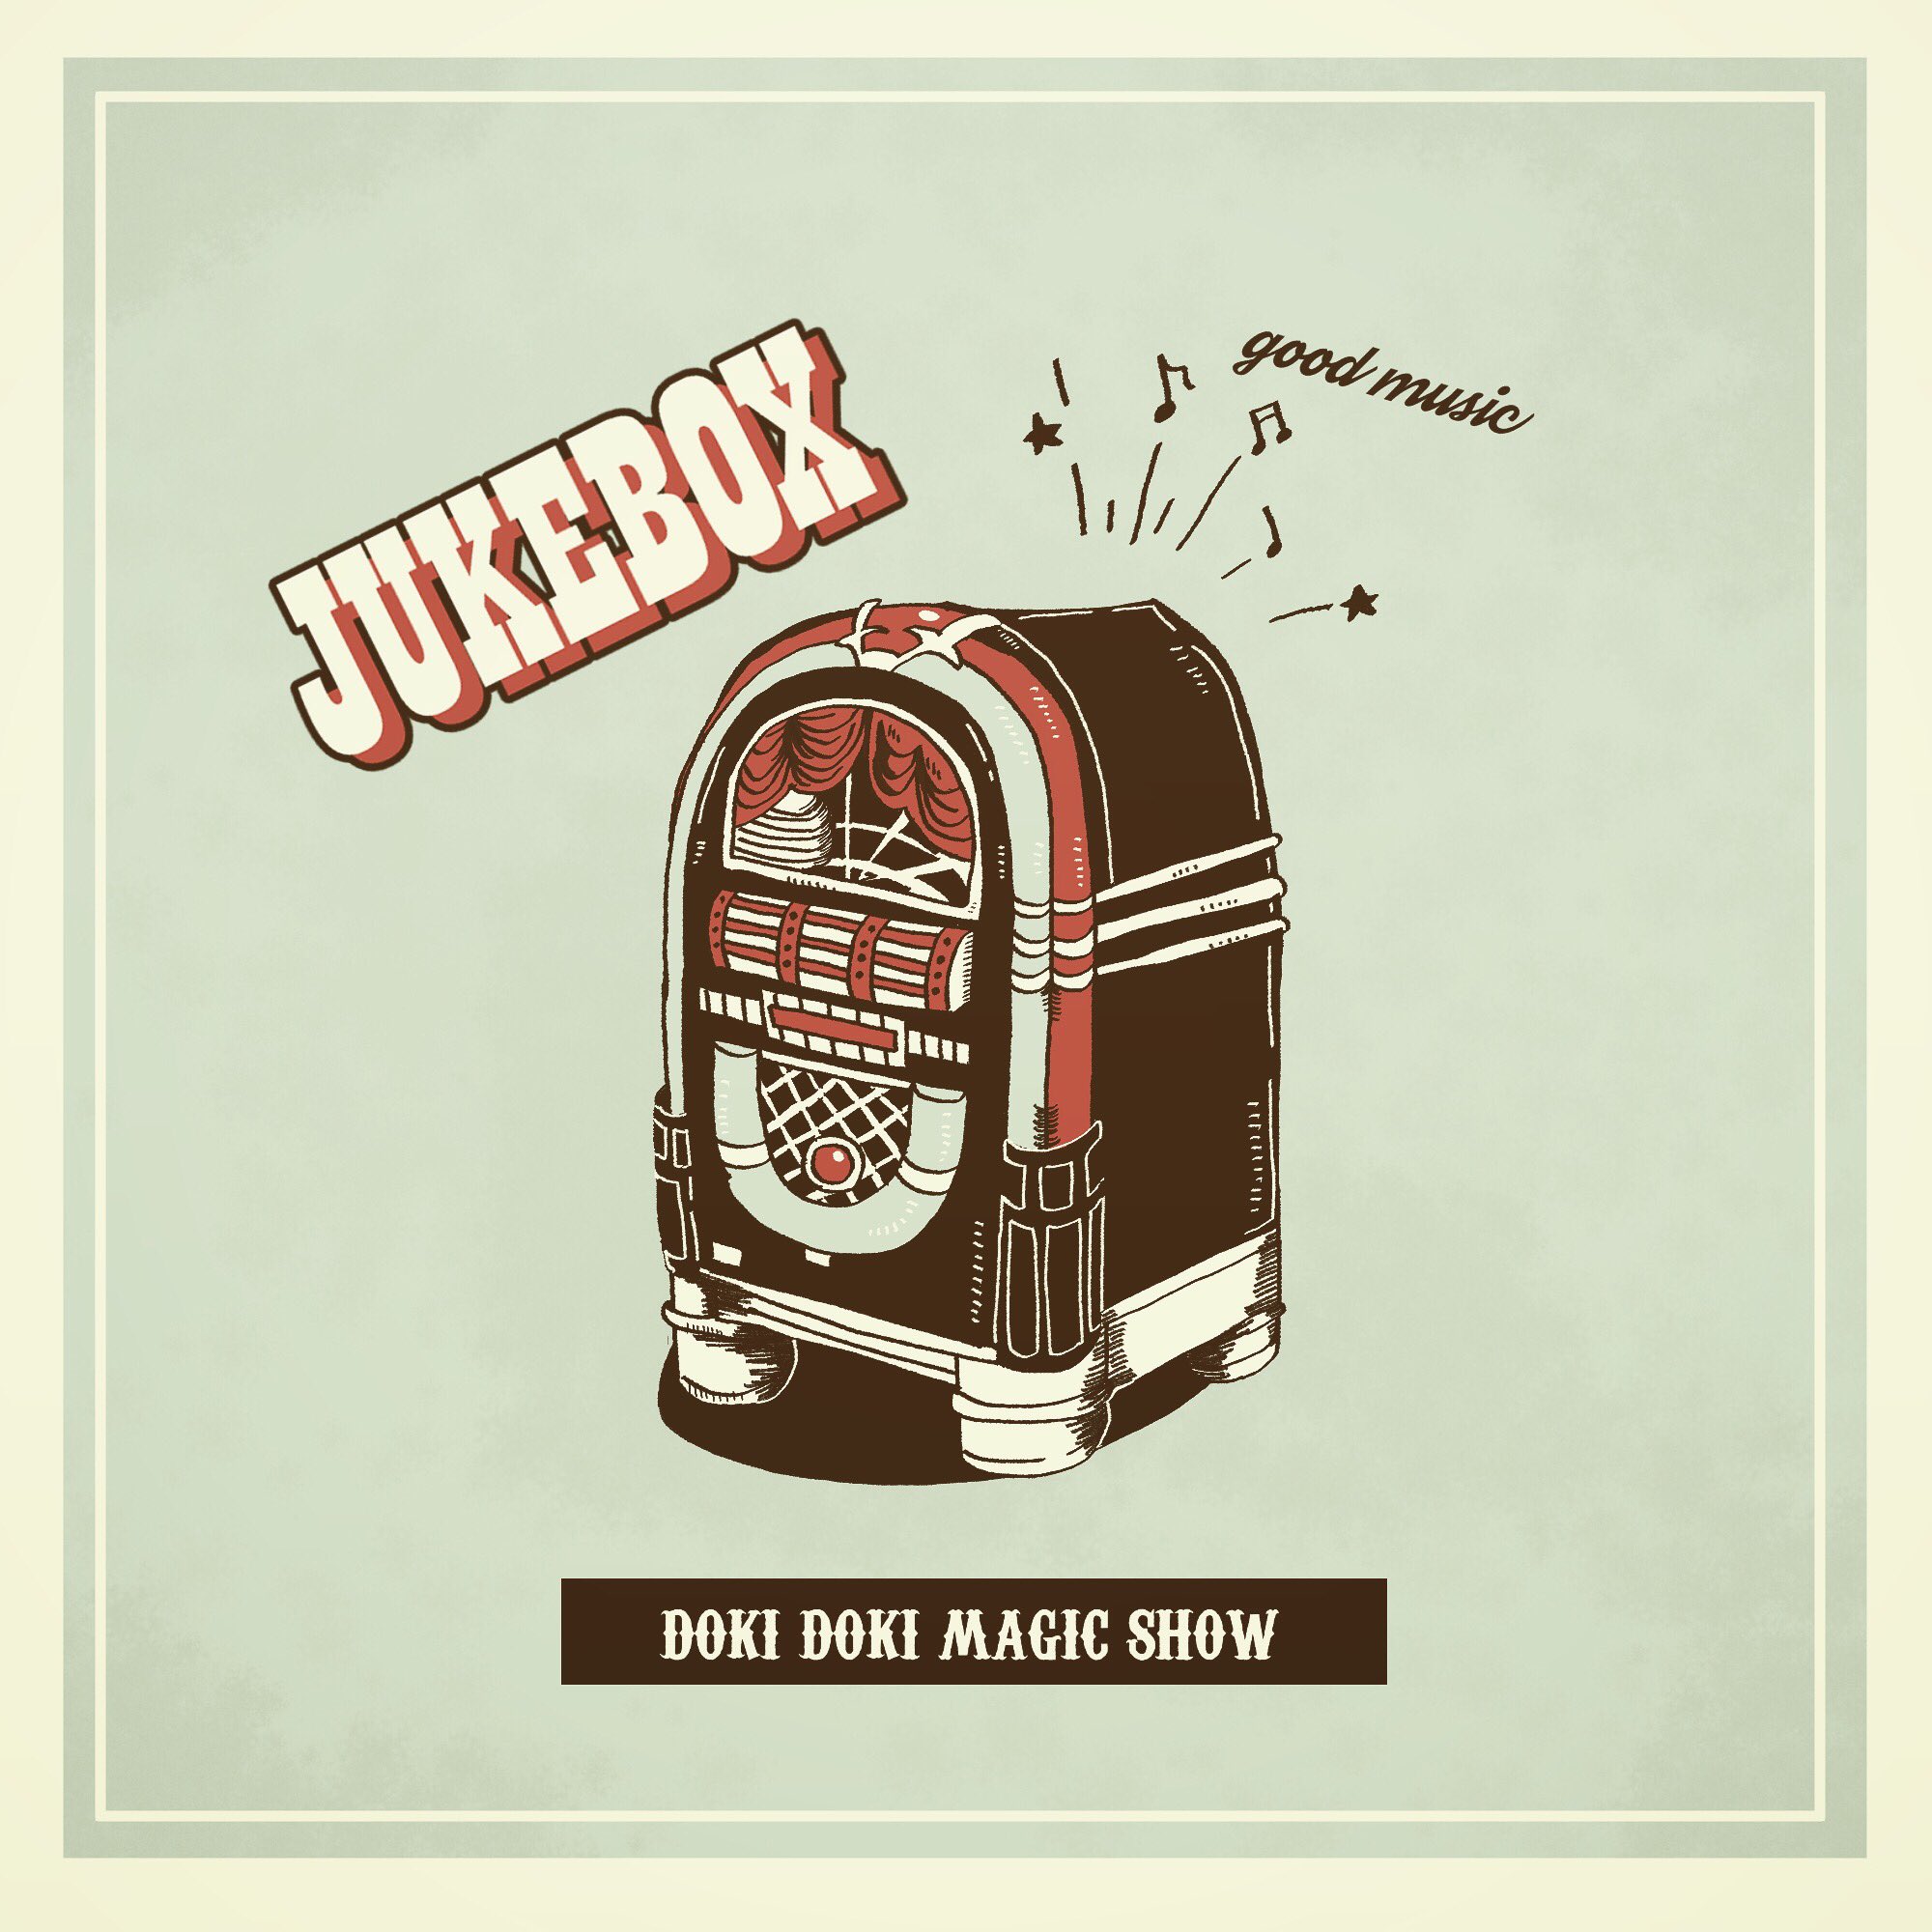 Magiko Jukebox イラスト イラストグラム 絵 デザイン ジュークボックス おしゃれ かわいい ヴィンテージ アメリカン ヴィンテージ家具 1930s Drowing Illastration Design Vintage Jukebox T Co Lz0wellsje T Co